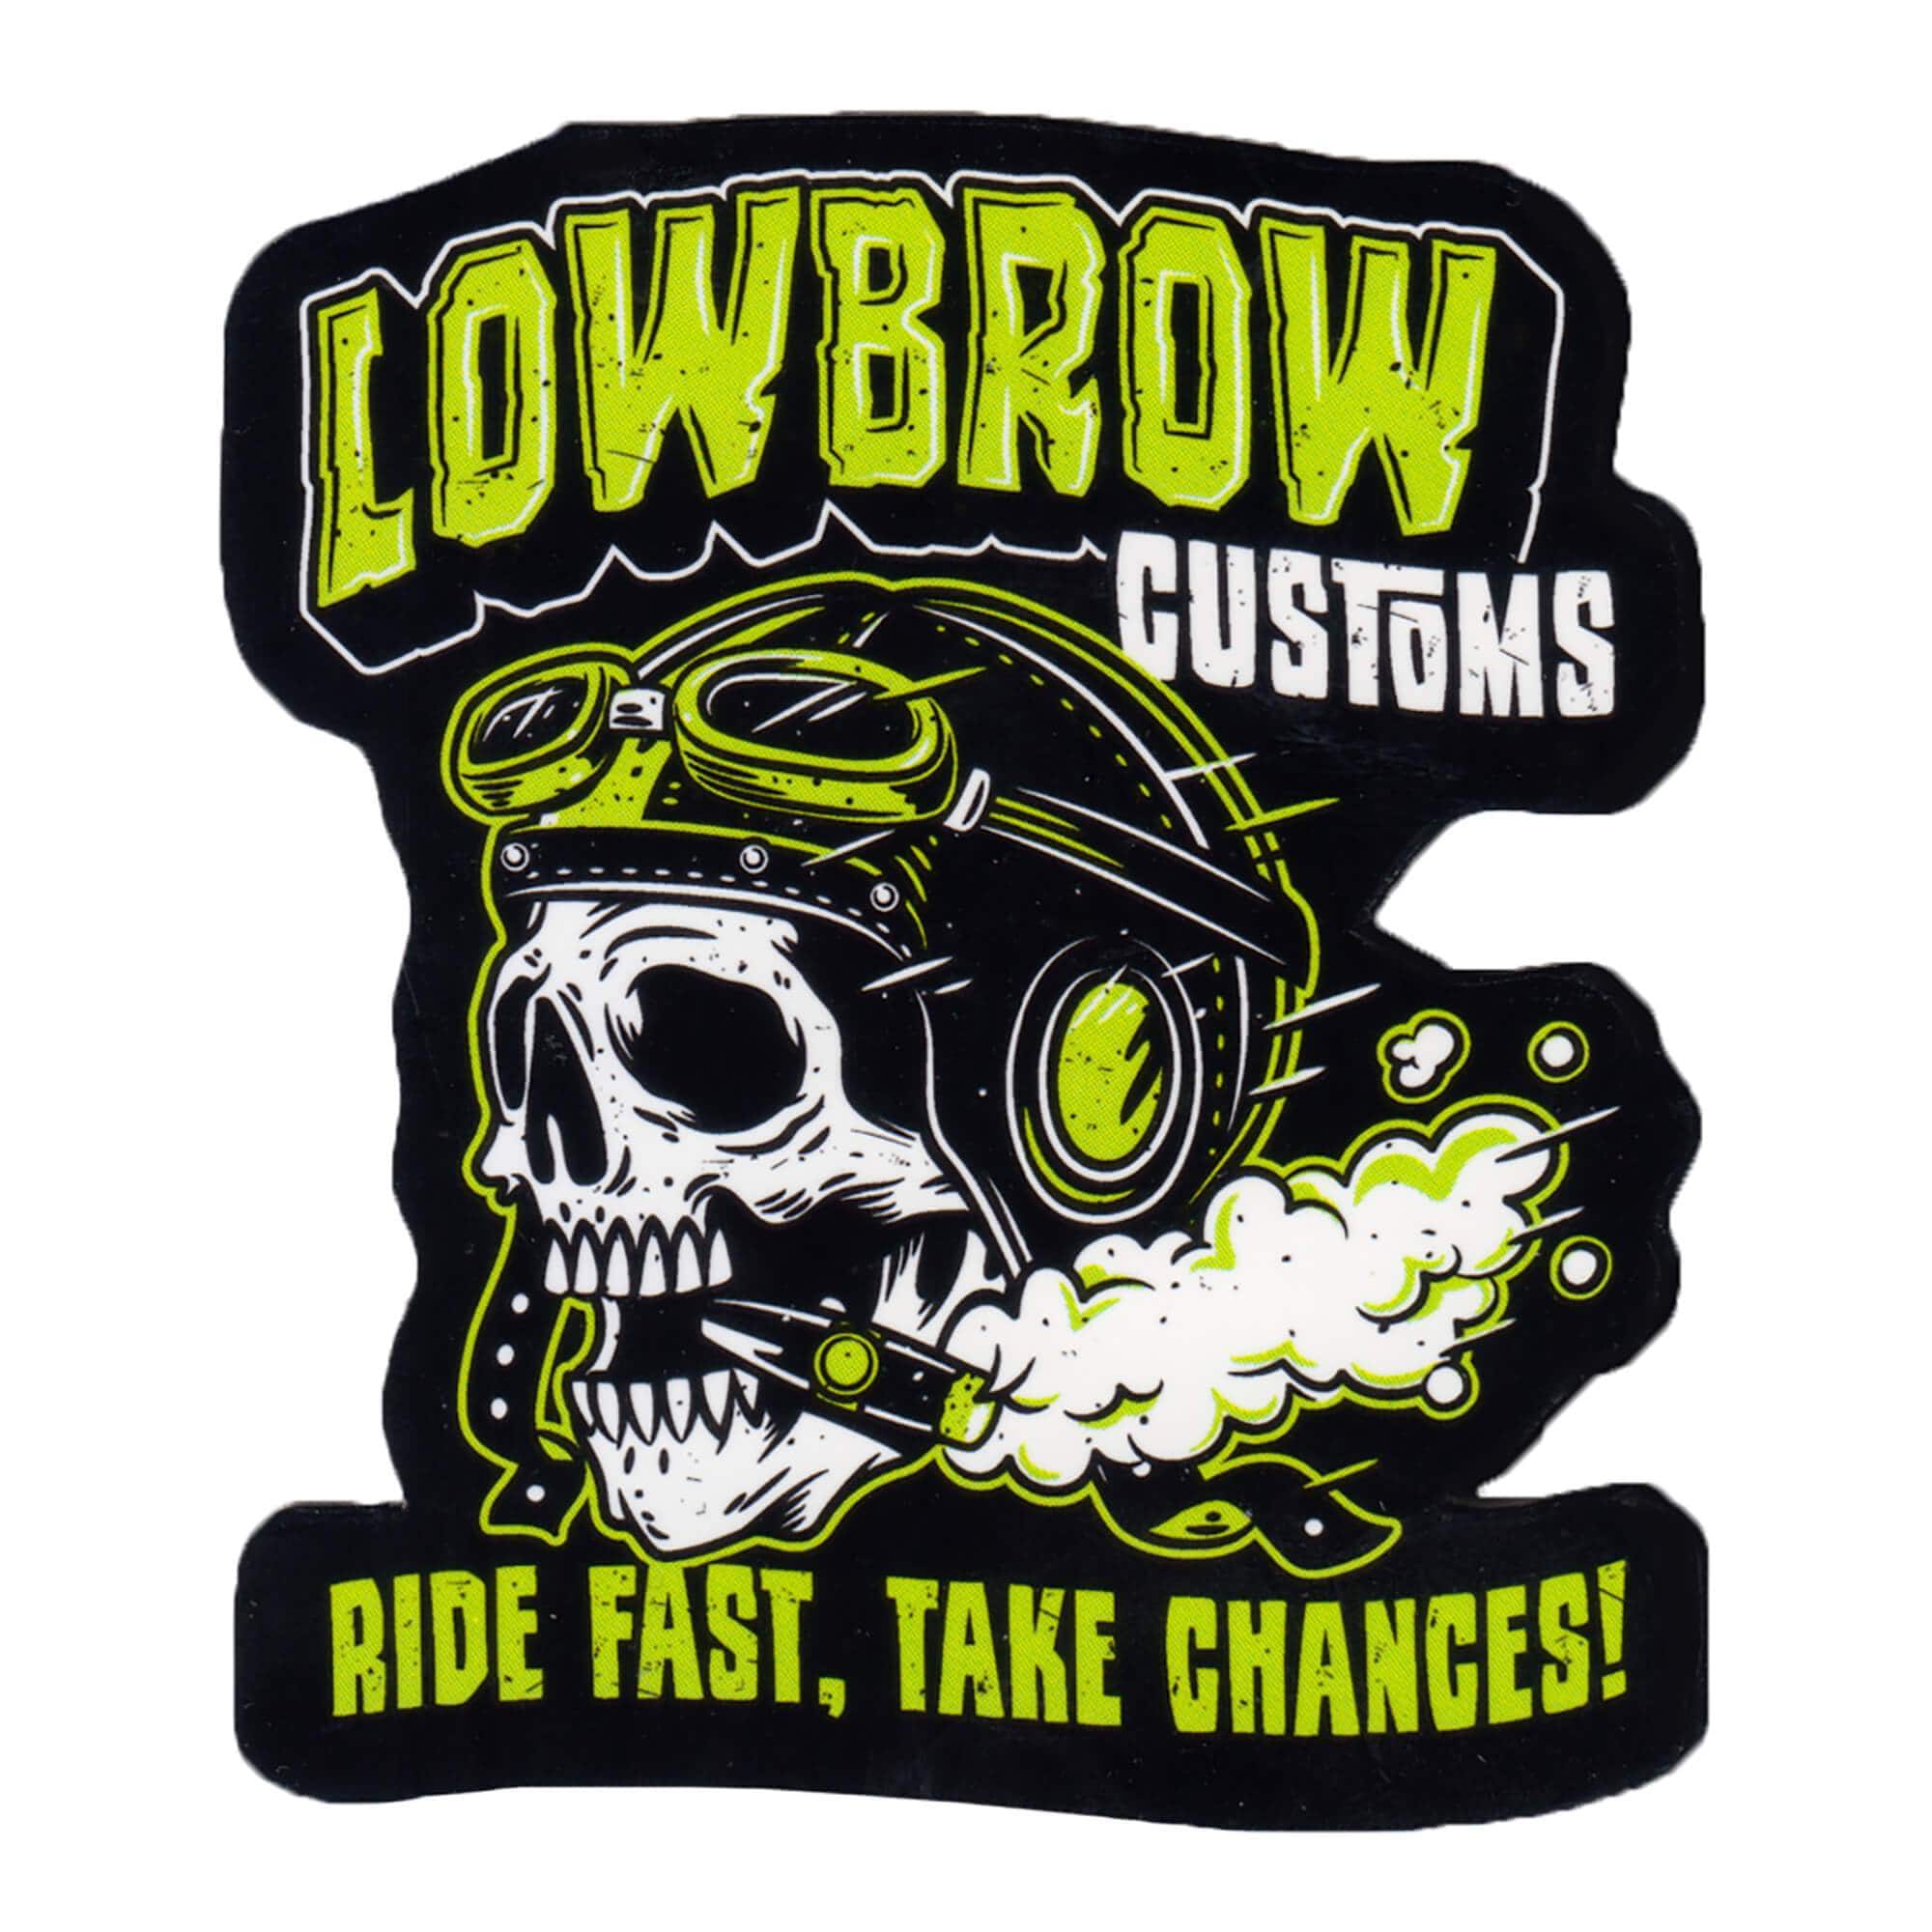 lowbrowcustoms 